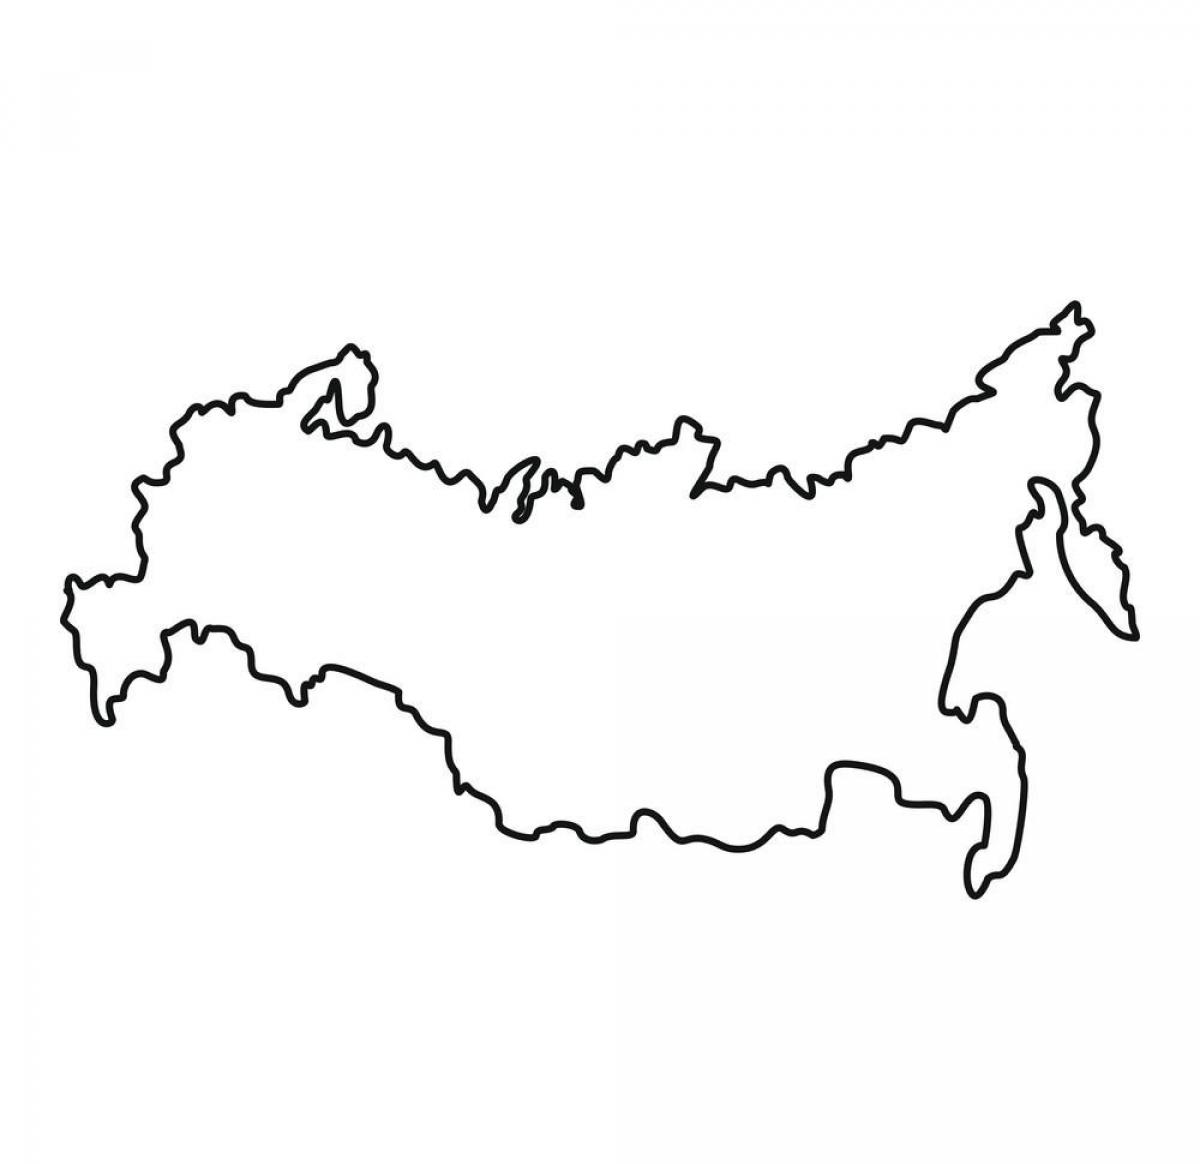 Mapa konturowa Rosji